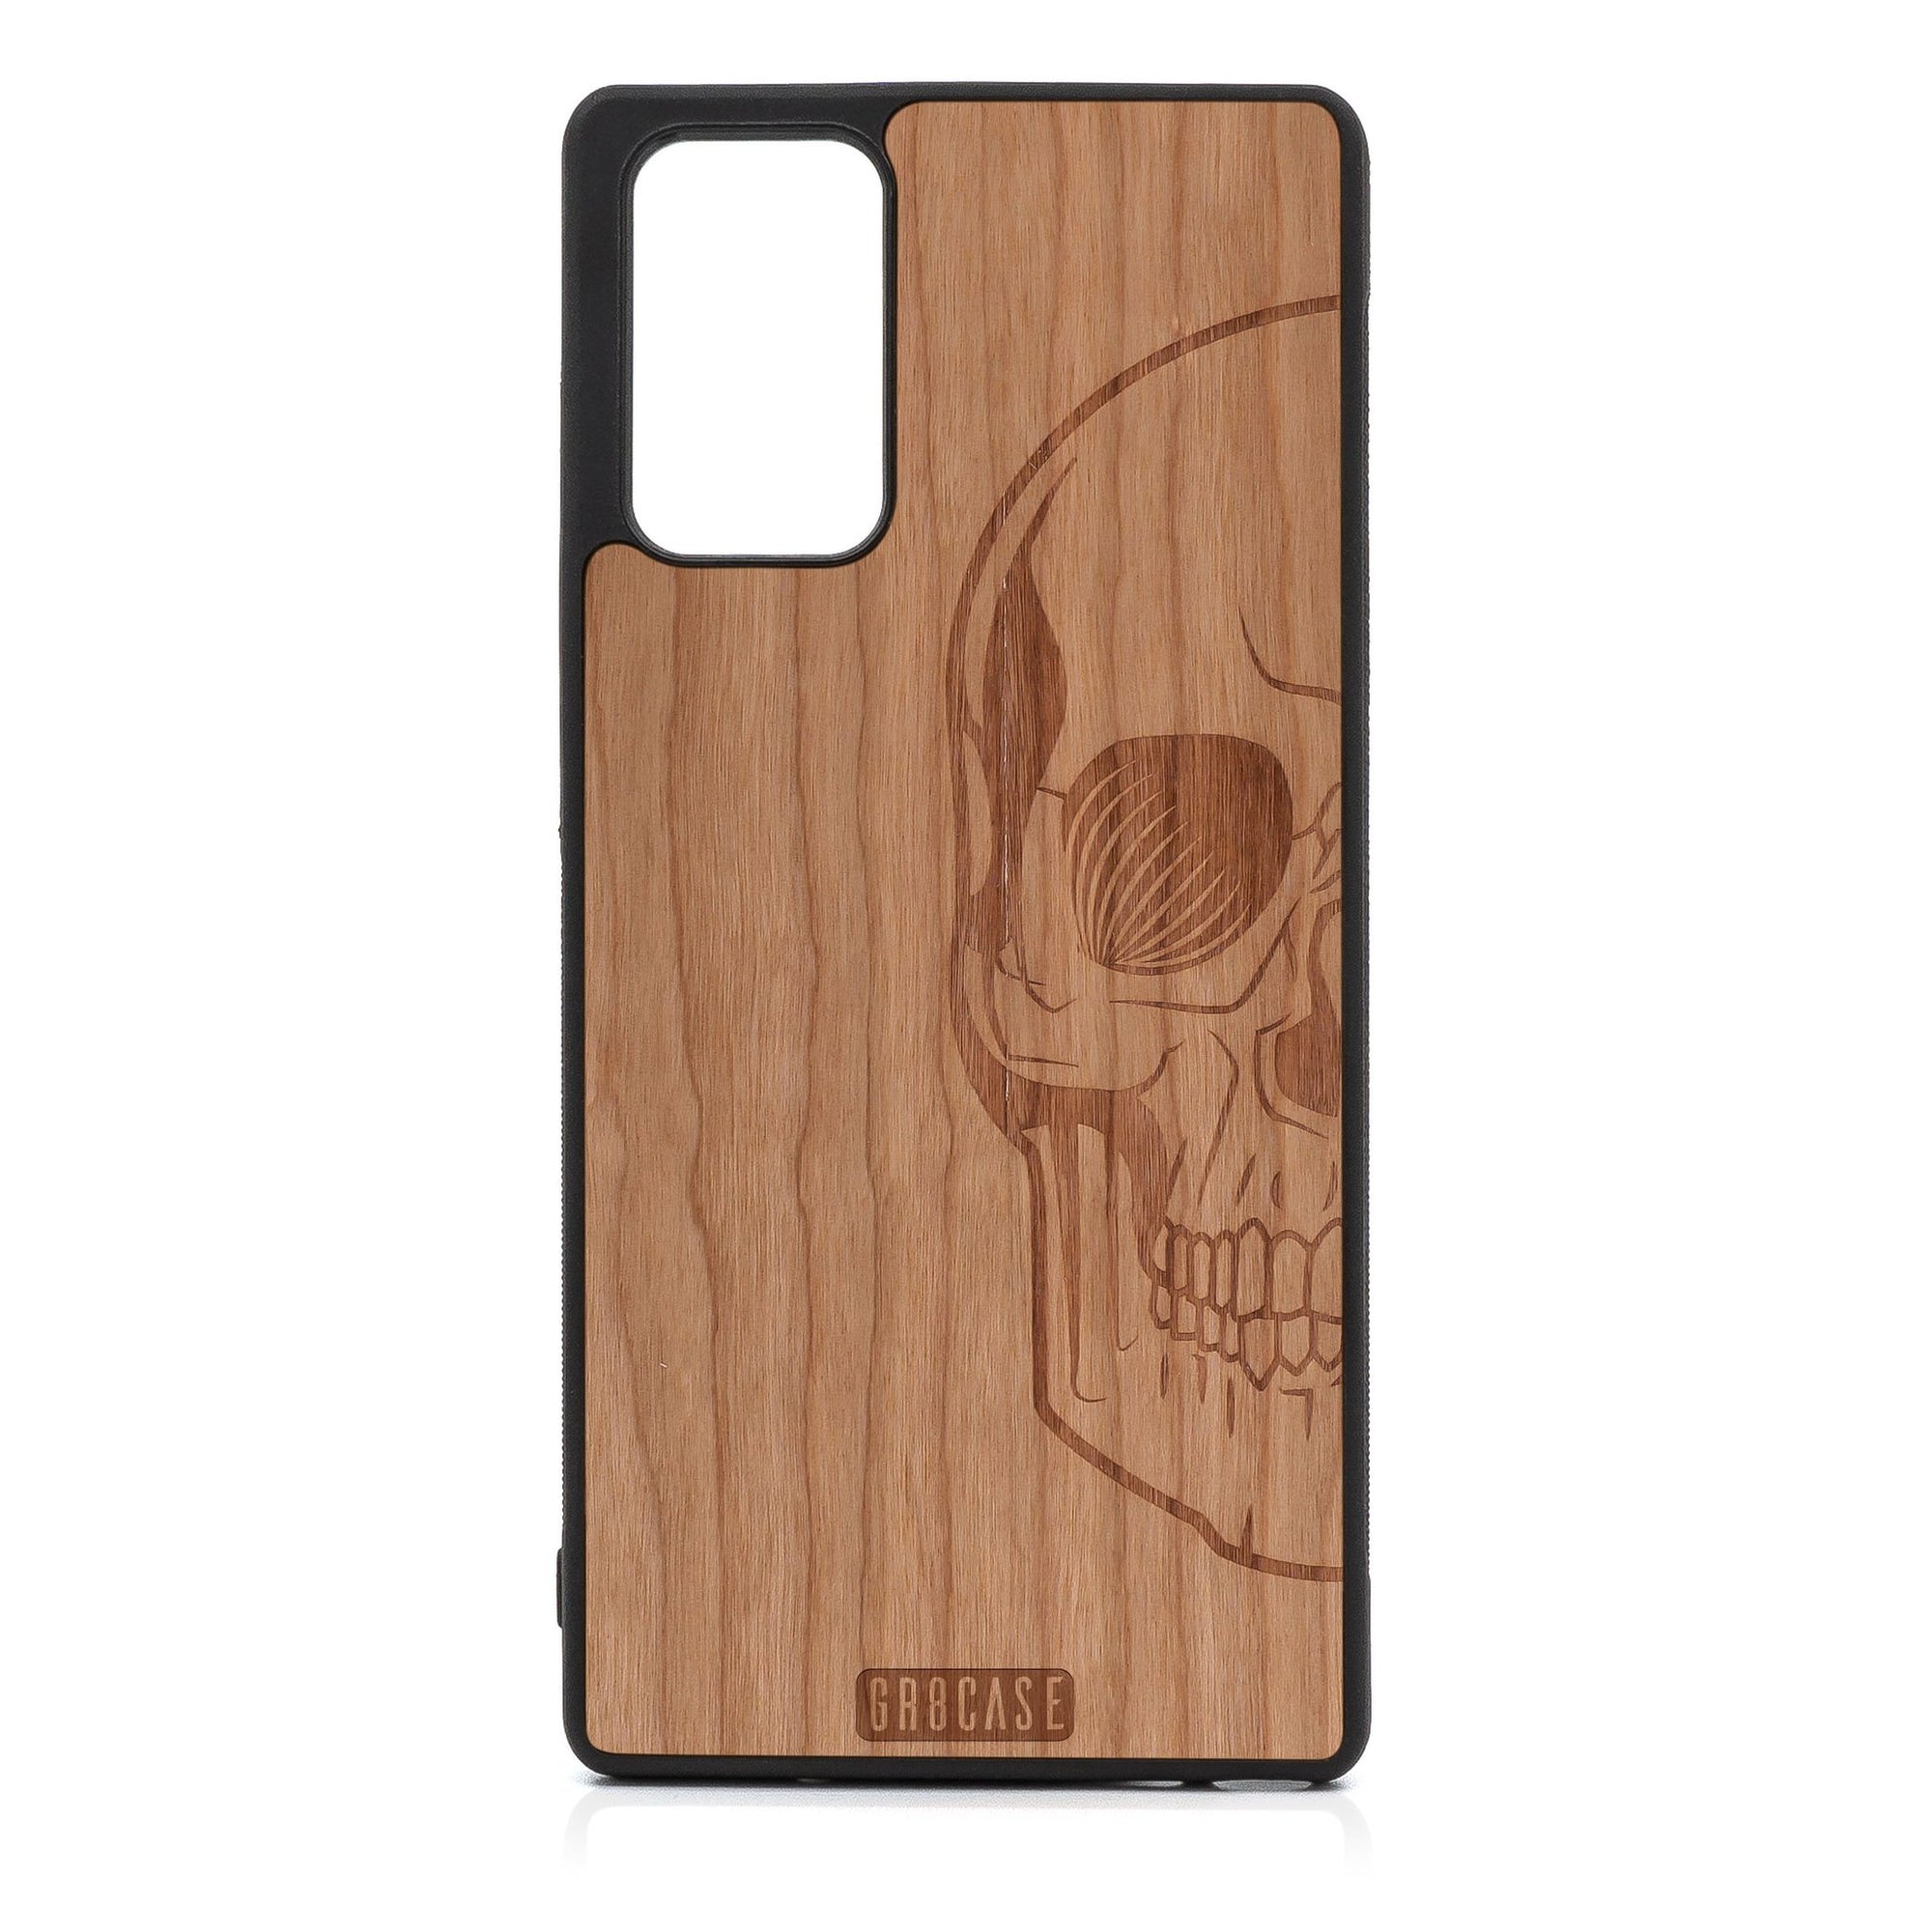 Half Skull Design Wood Case For Samsung Galaxy Note 20